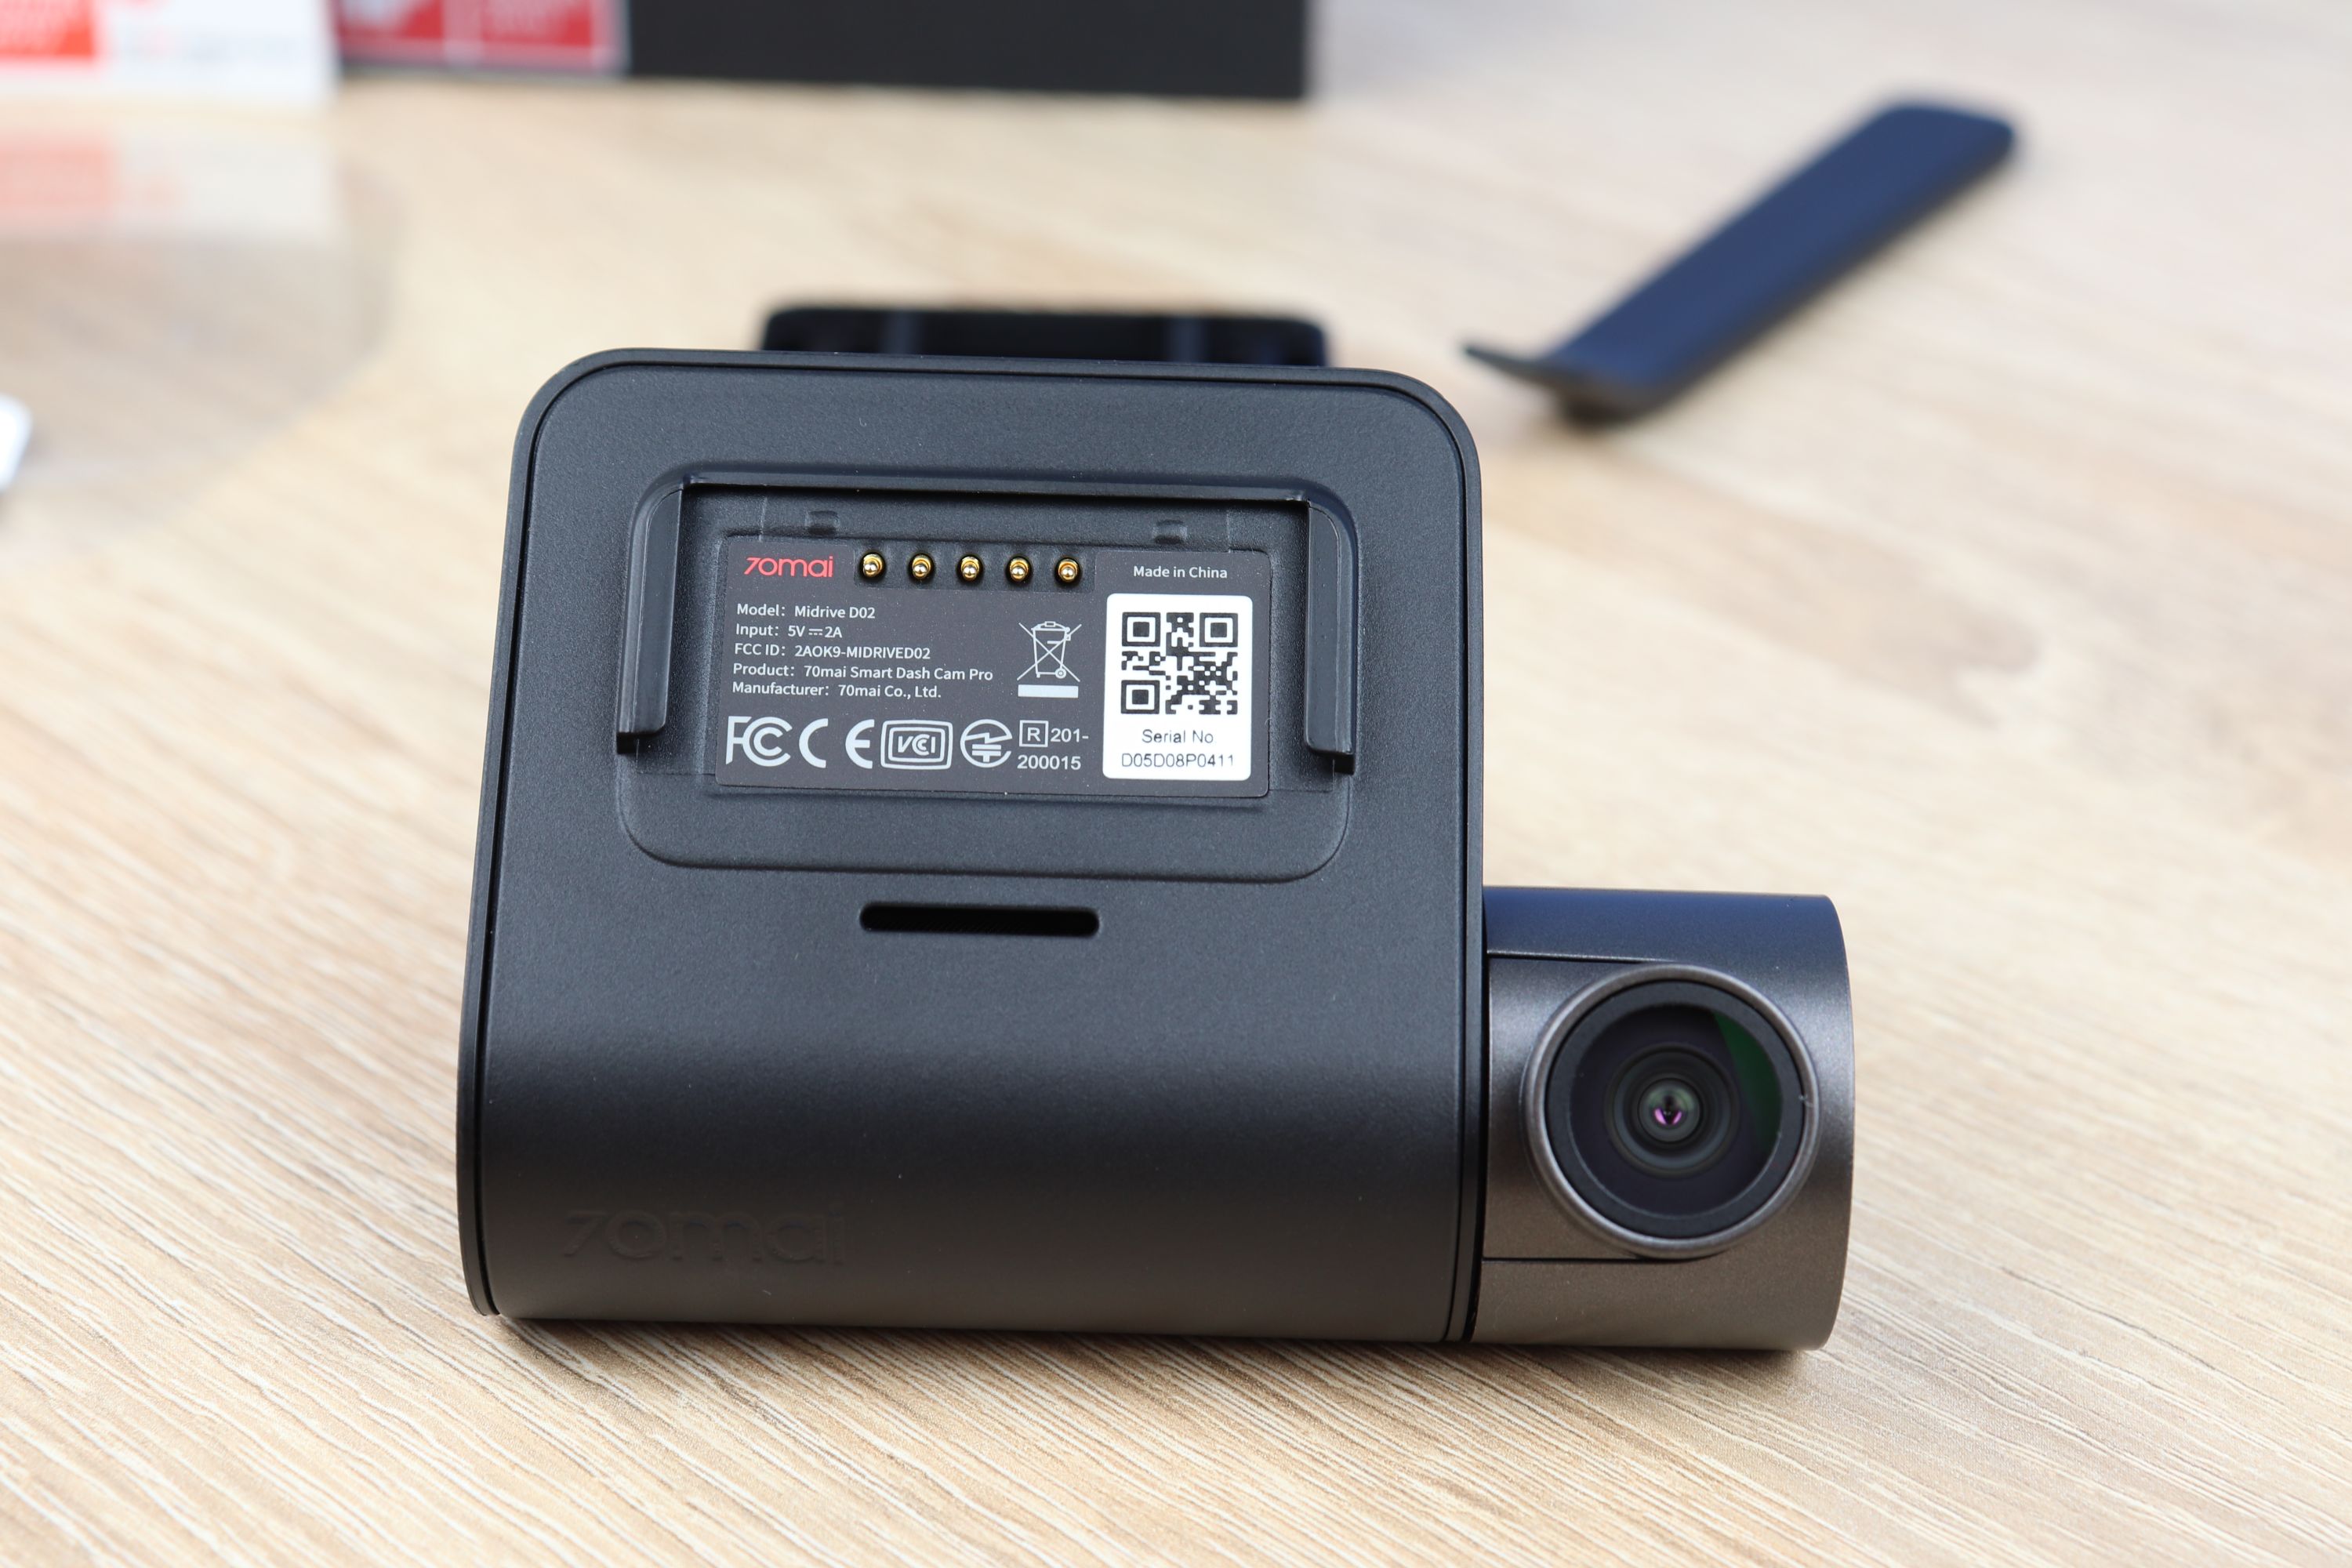 70mai Smart Dashcam Pro im Test - Das beste Dashcam?